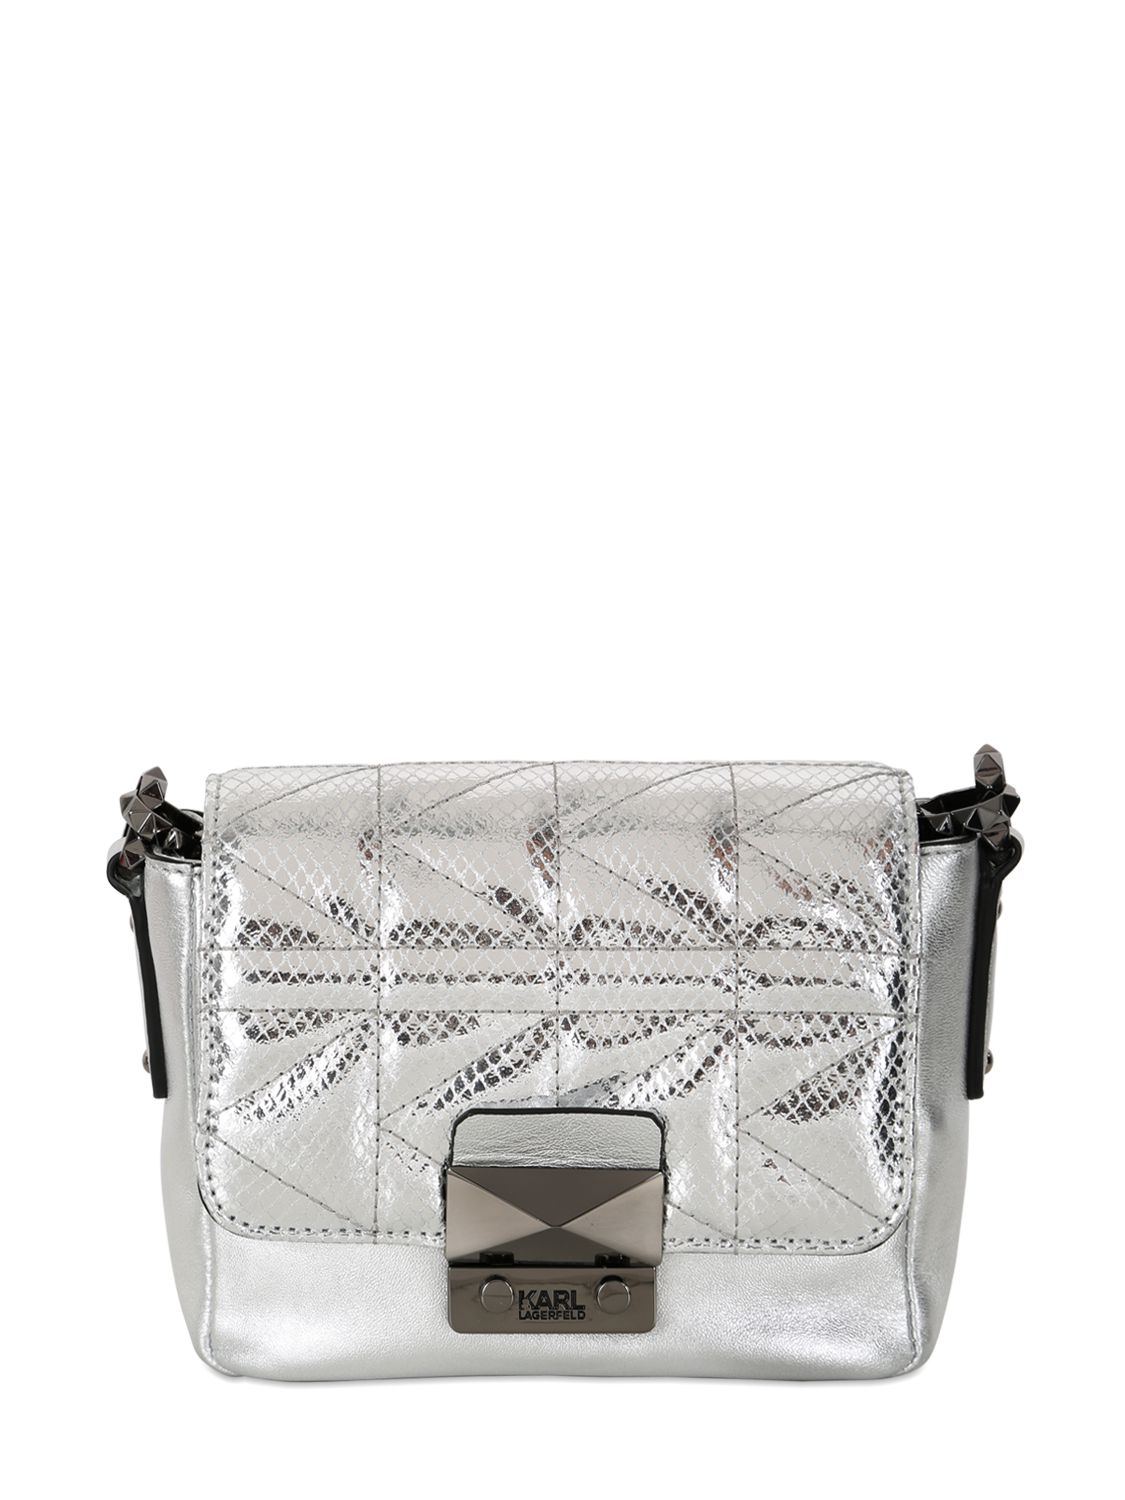 Lyst - Karl Lagerfeld Kuilted Metallic Leather Shoulder Bag in Metallic